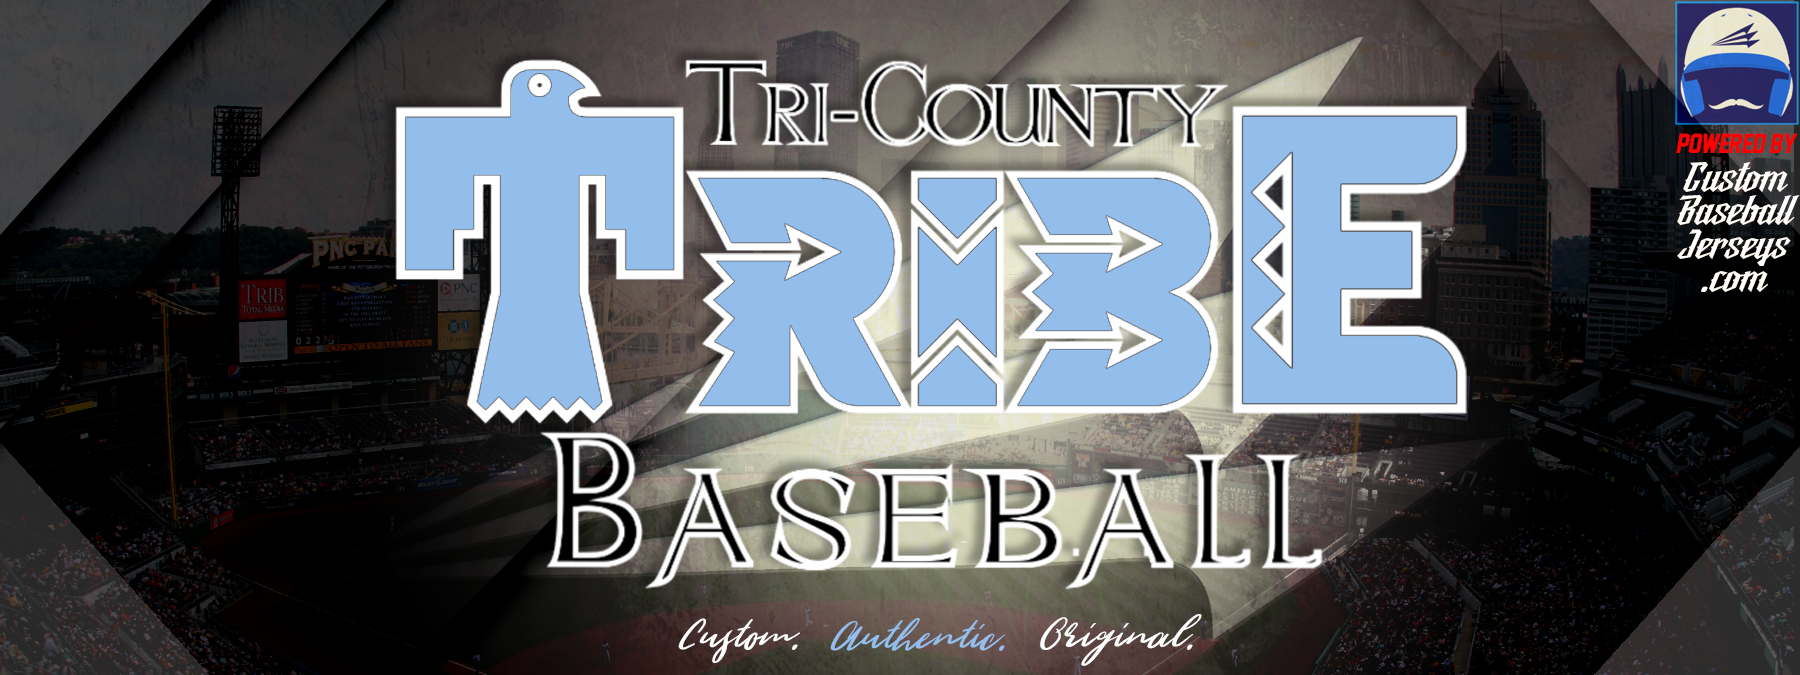 Tri County Timberwolves Custom Baseball Jerseys